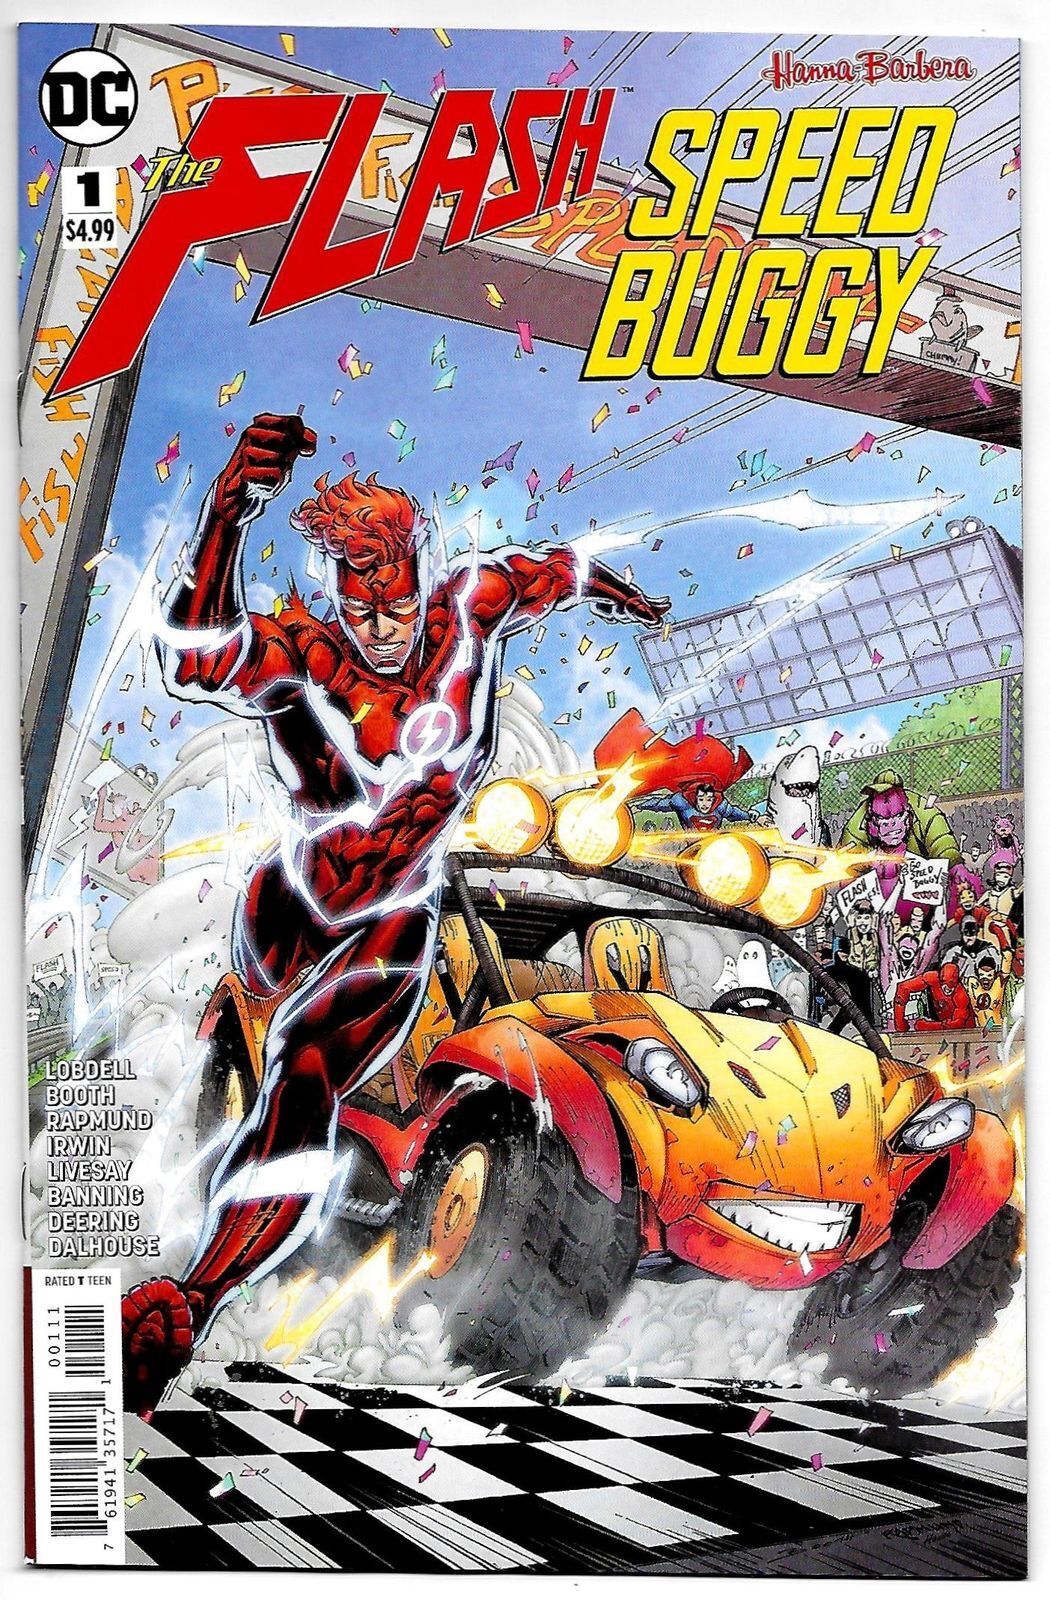 The Flash Speed Buggy #1 Hanna Barbera DC Comic 1st Print 2018 NM